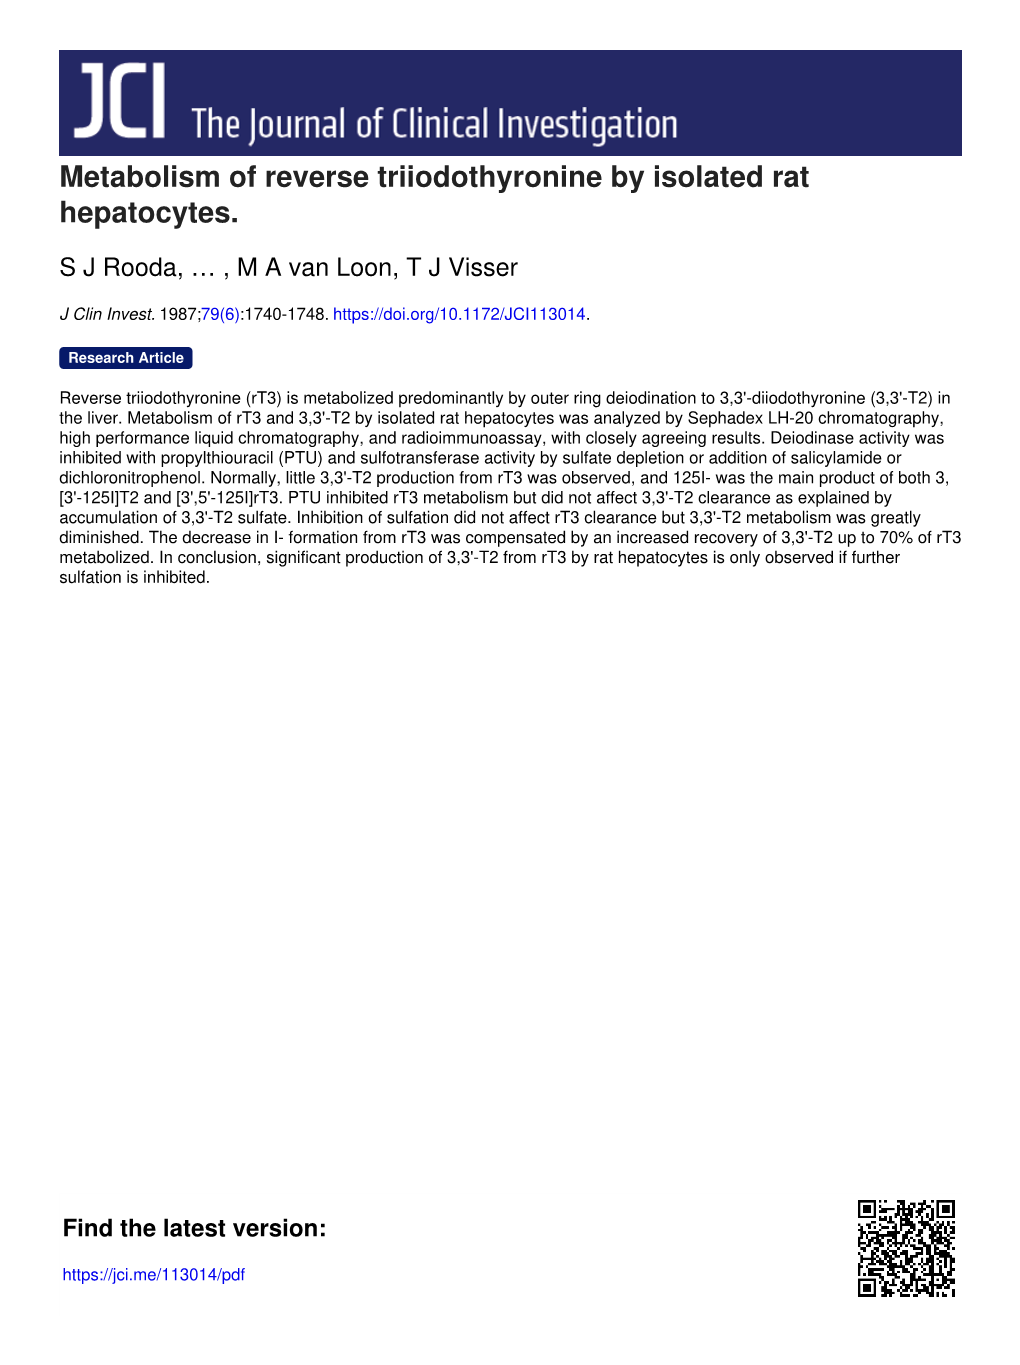 Metabolism of Reverse Triiodothyronine by Isolated Rat Hepatocytes